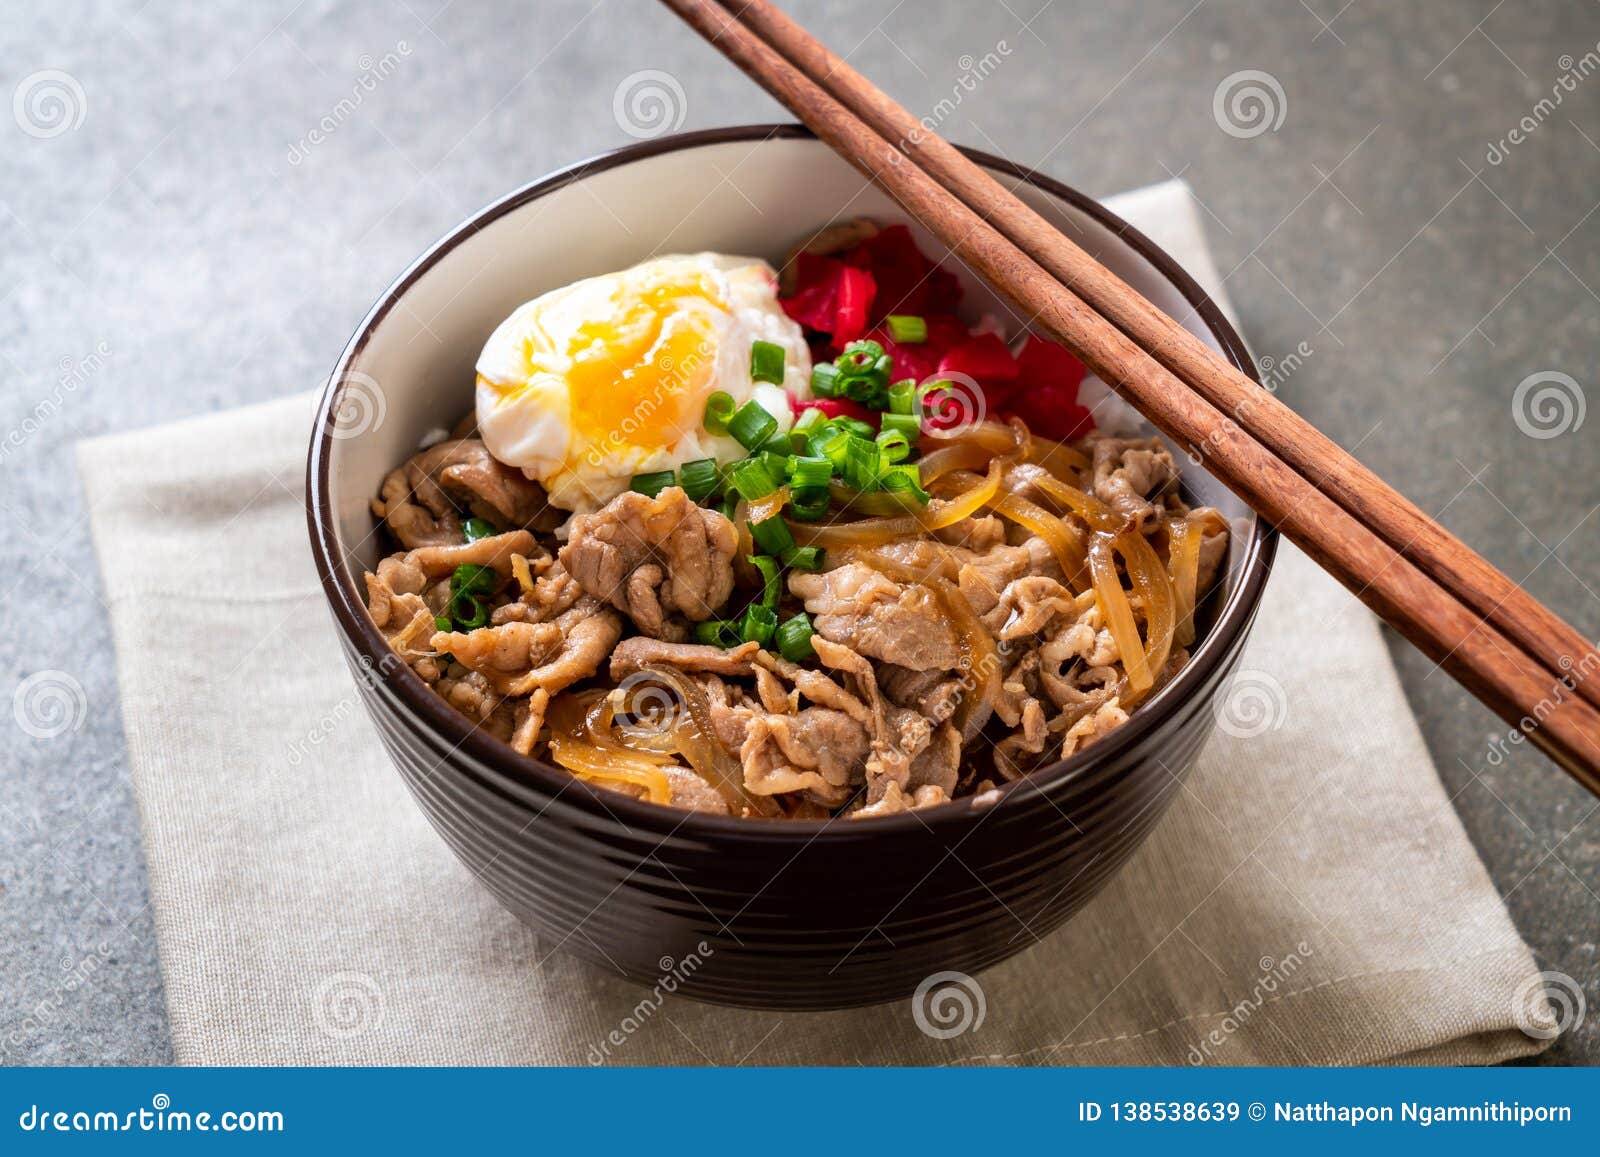 Pork Rice Bowl With Egg (Donburi) - Japanese Food Stock Image - Image